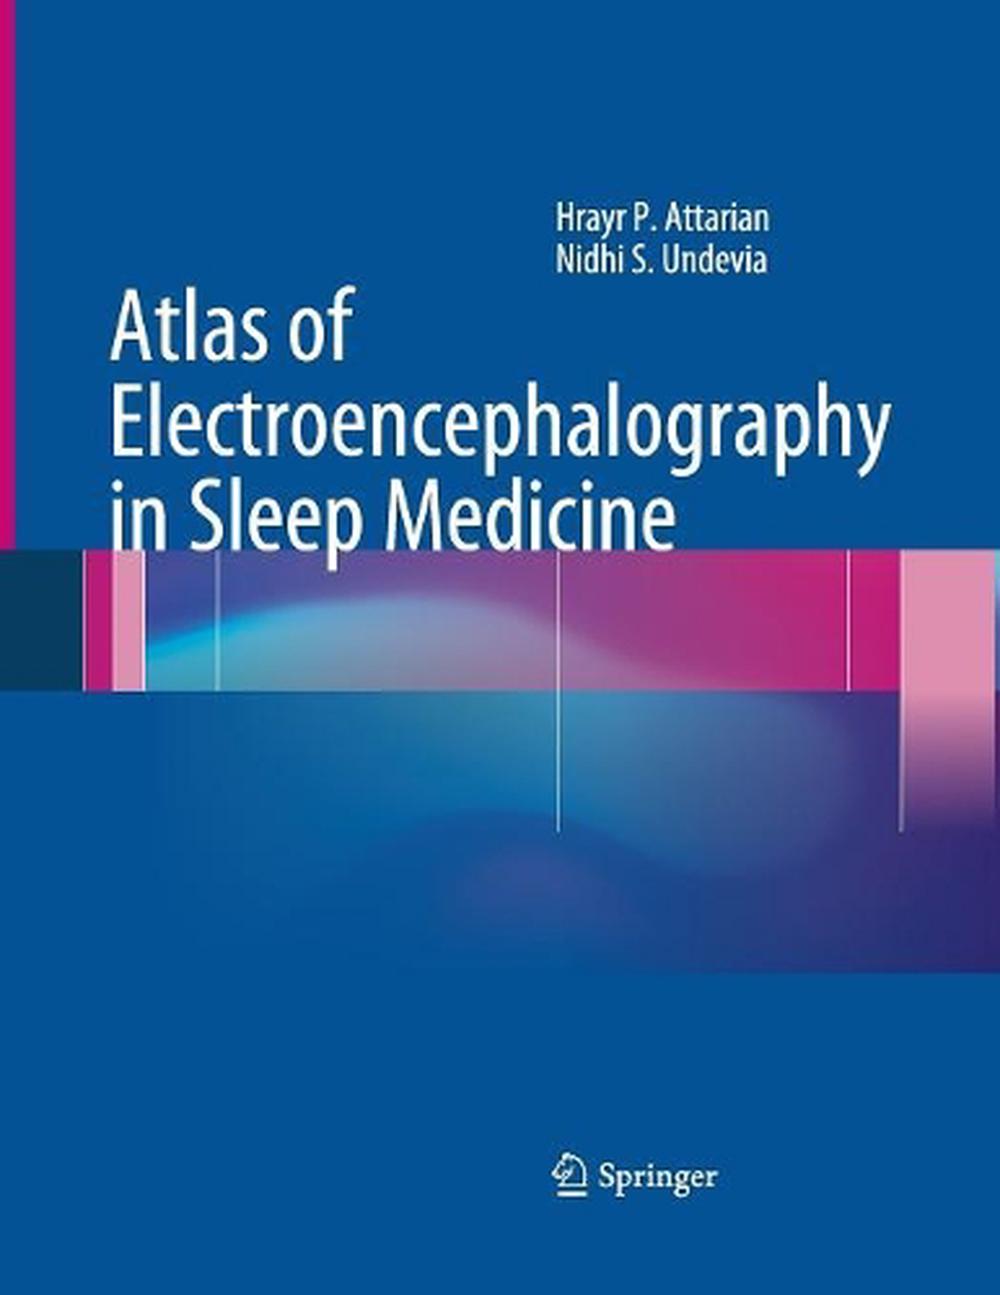 Atlas of Electroencephalography in Sleep Medicine by Hrayr P. Attarian